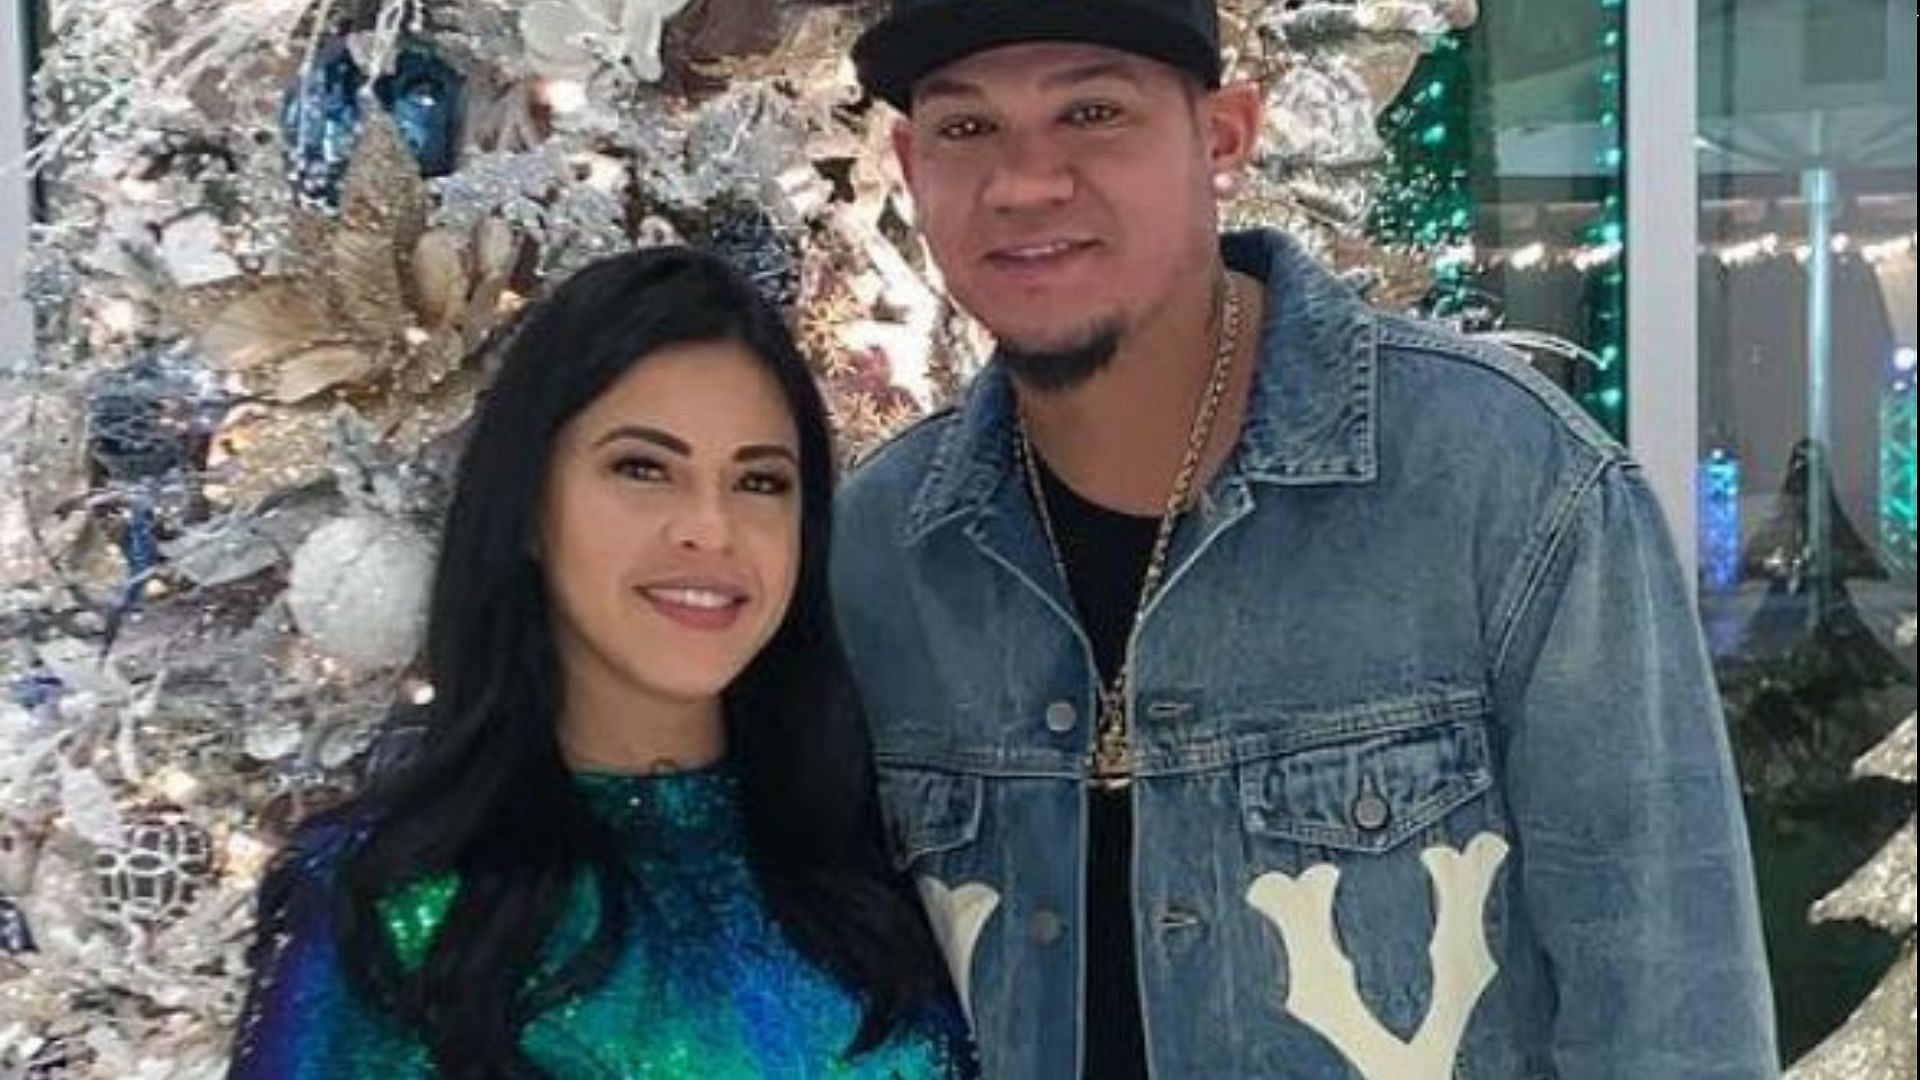 Felix Hernandez and his wife